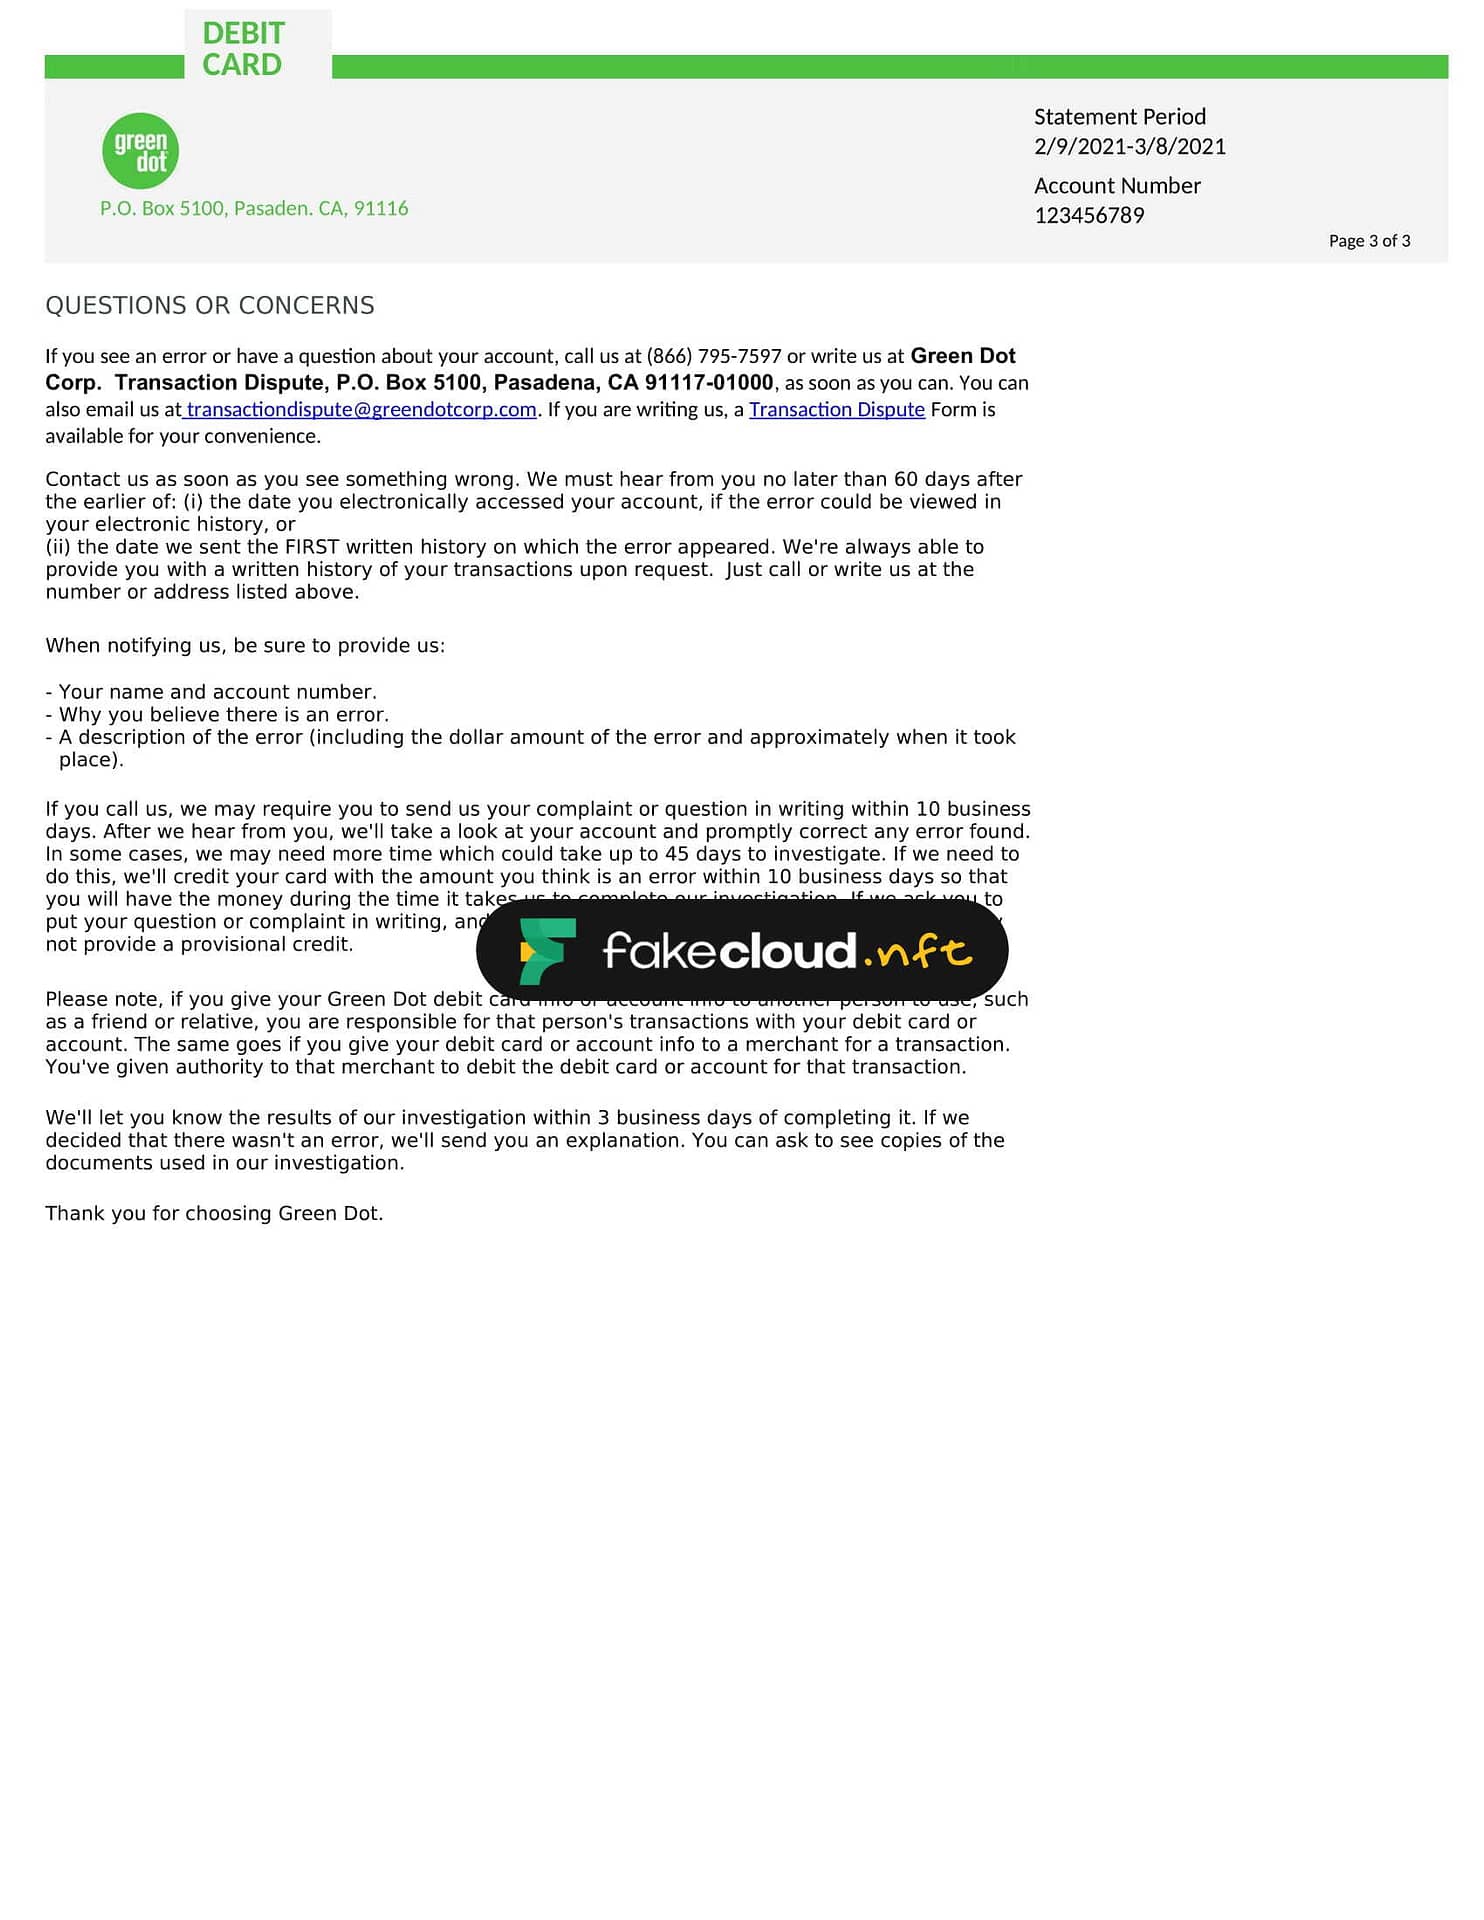 Green Dot Editable Word Bank Statement FakeCloud 3 0